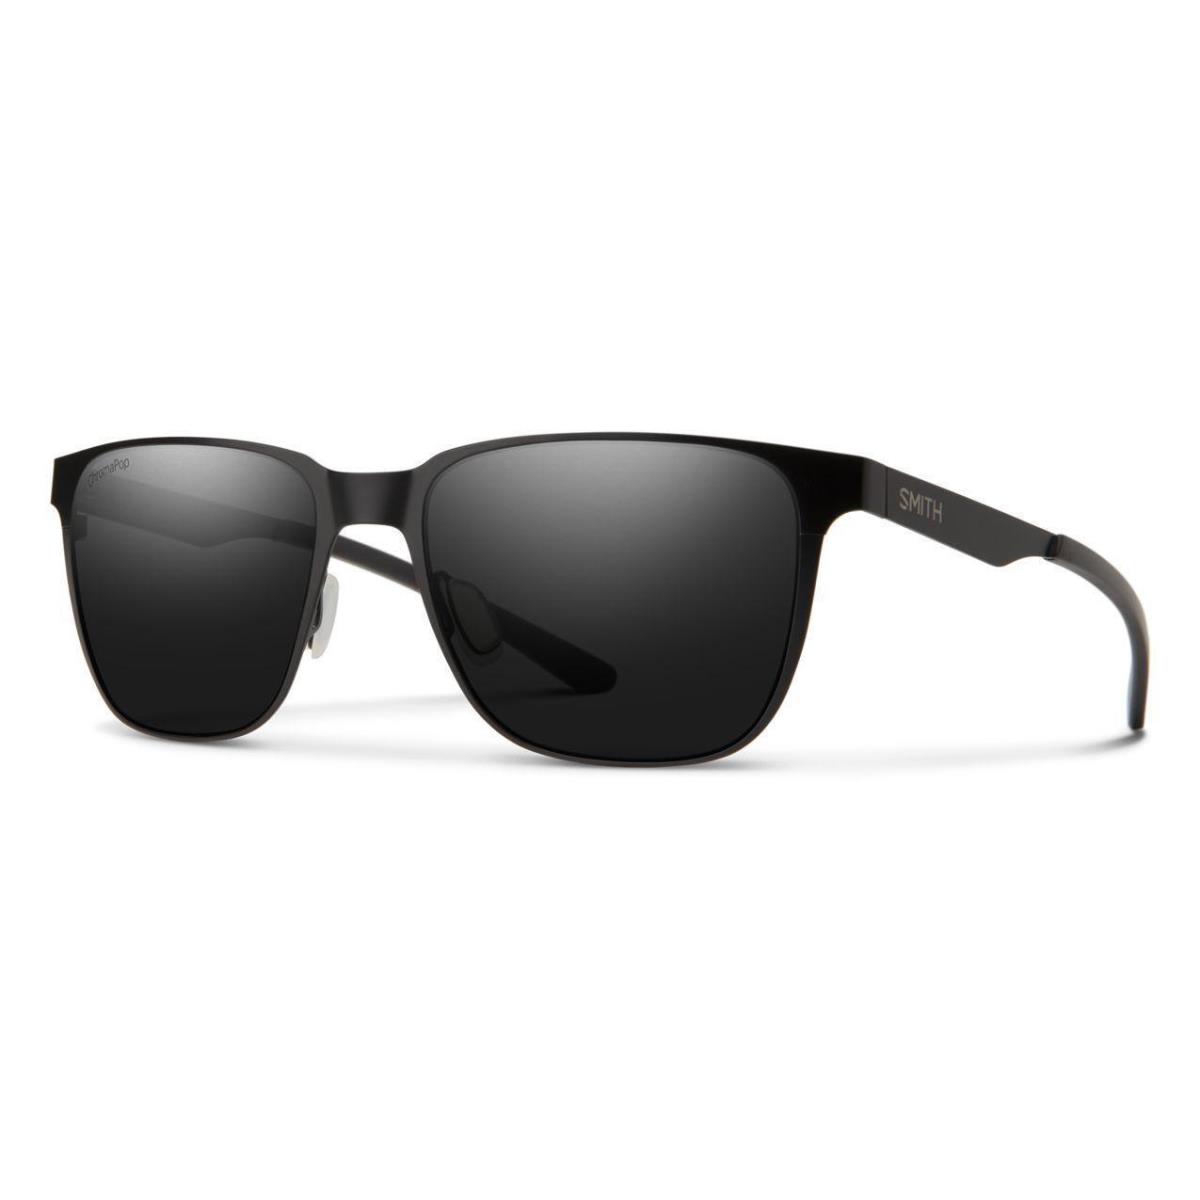 Smith Lowdown Metal Sunglasses Matte Black - Chromapop Polarized Black